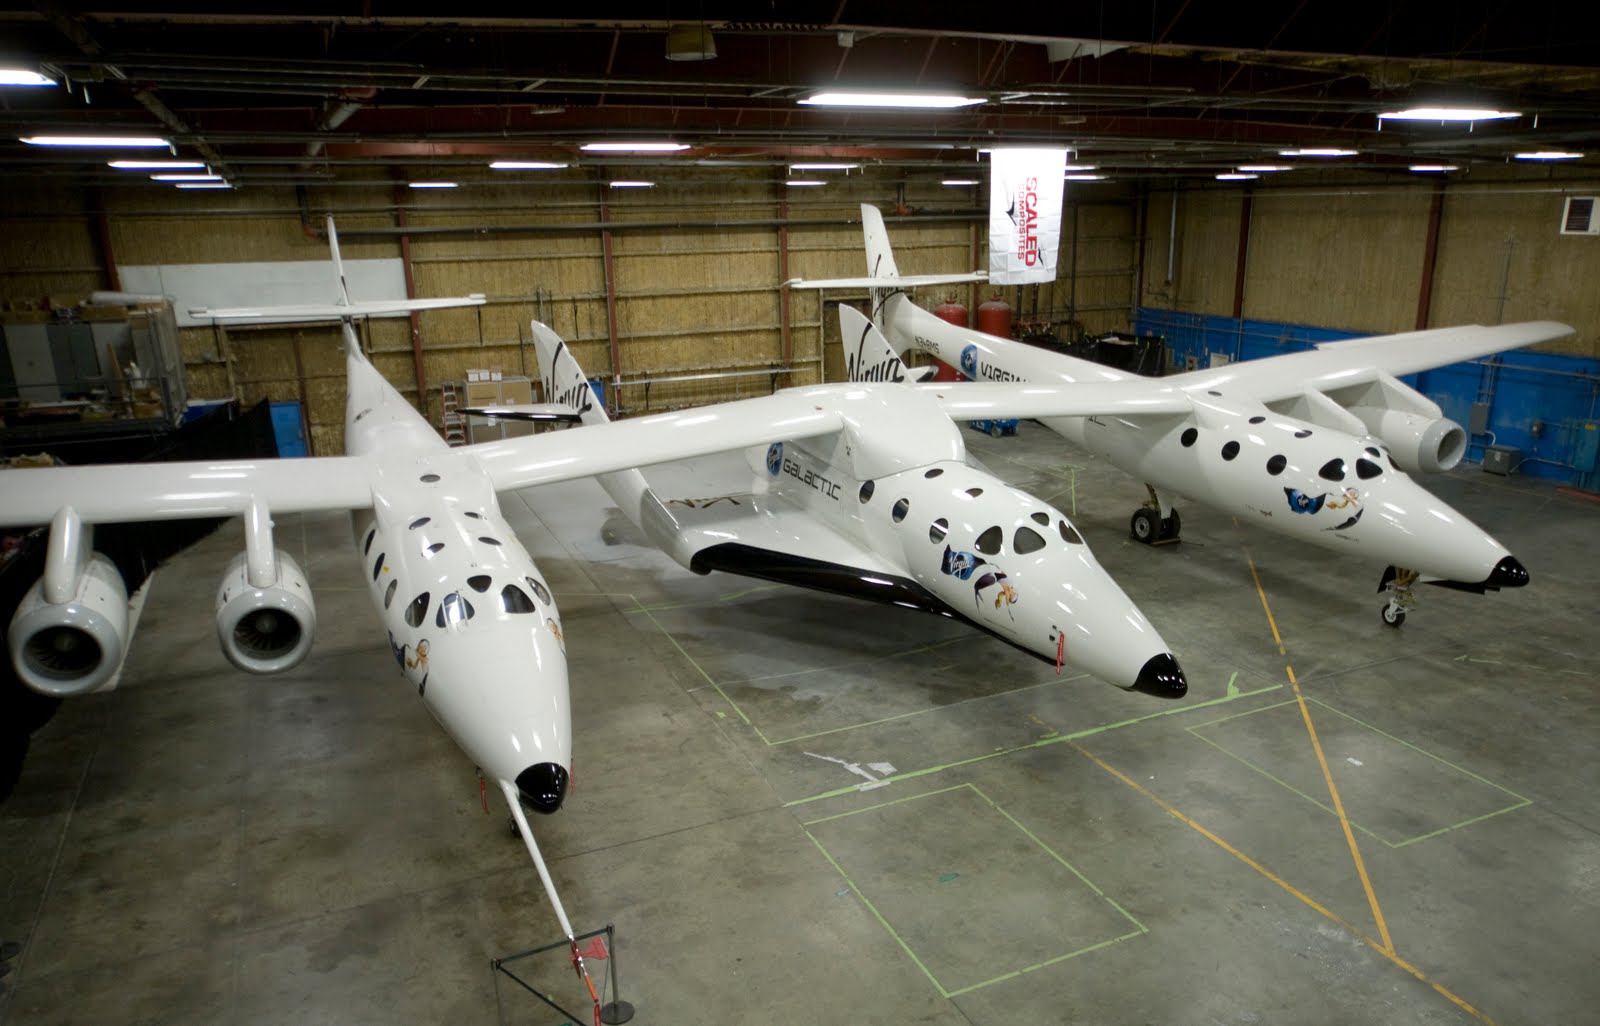 SpcashipTwo: a turista űrrepülőgép